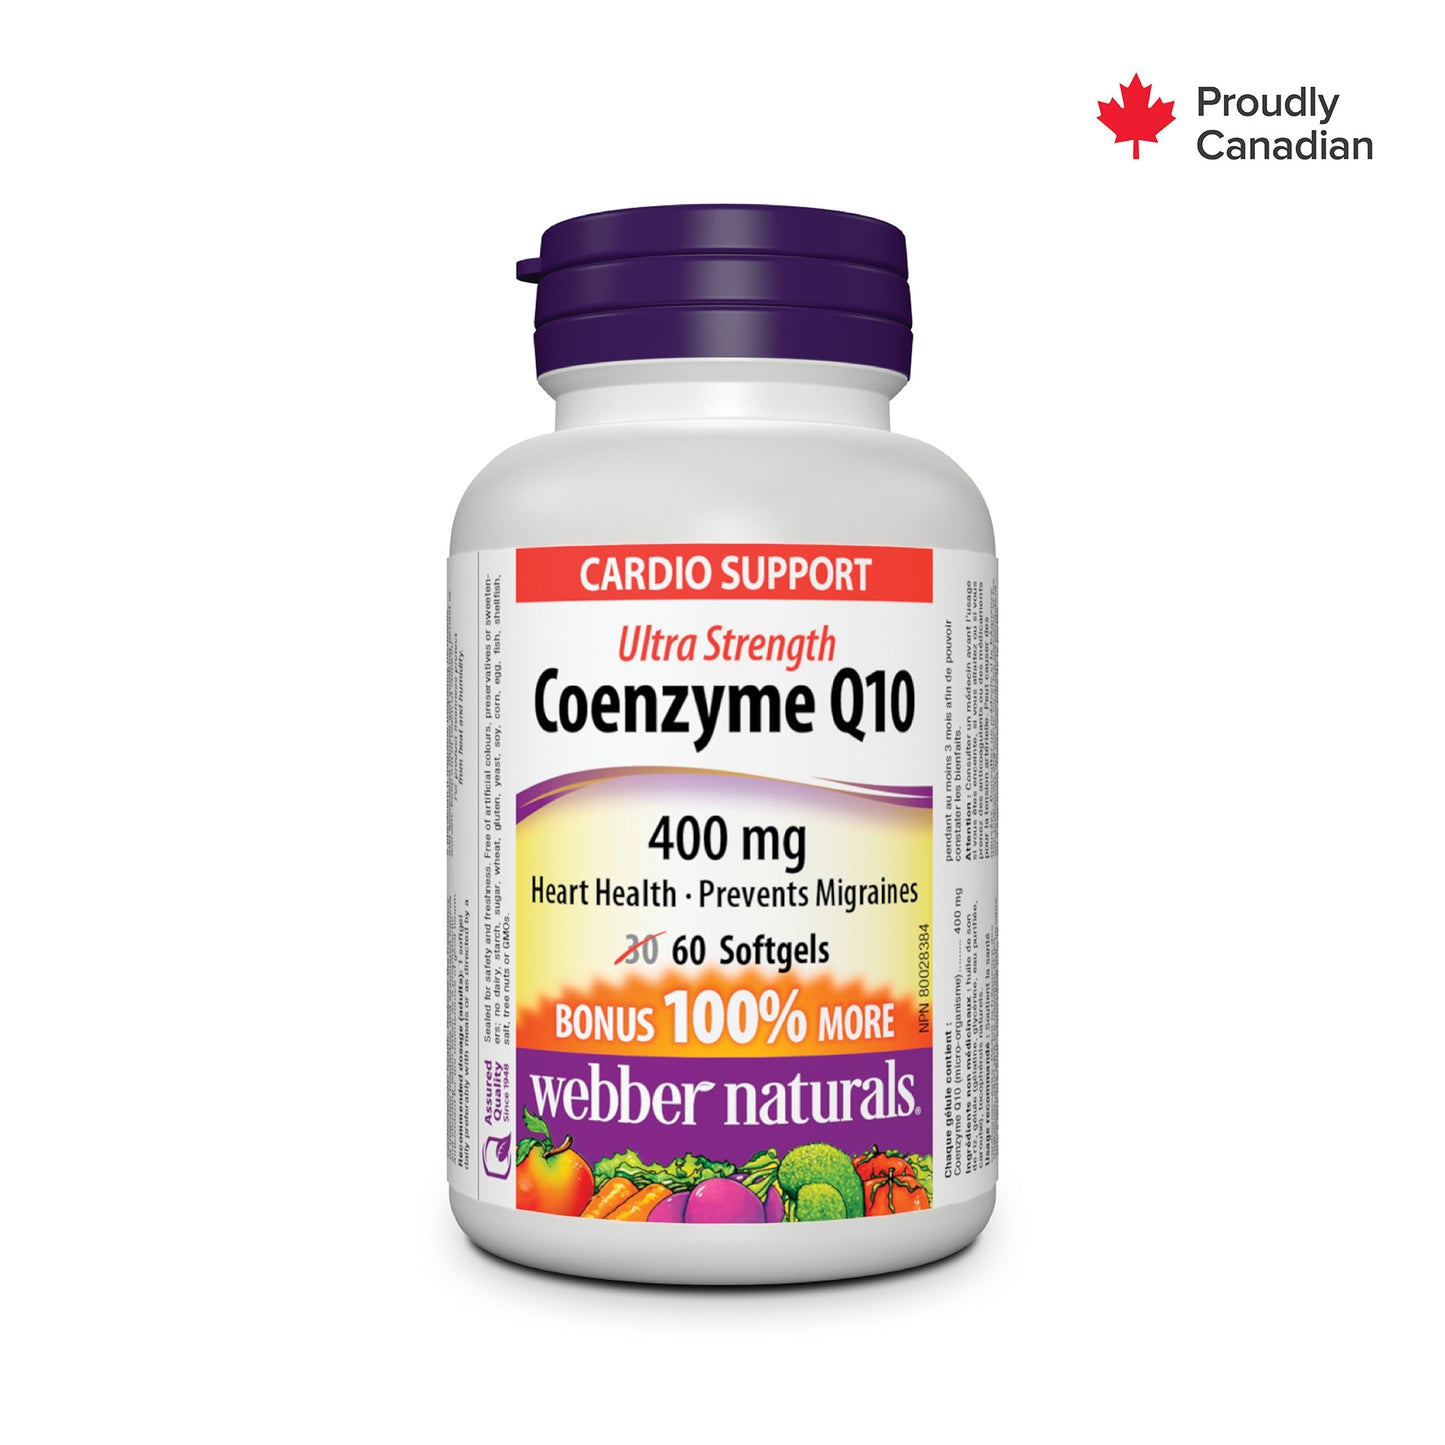 Coenzyme Q10 Ultra–fort 400 mg for Webber Naturals|v|hi-res|WN3858